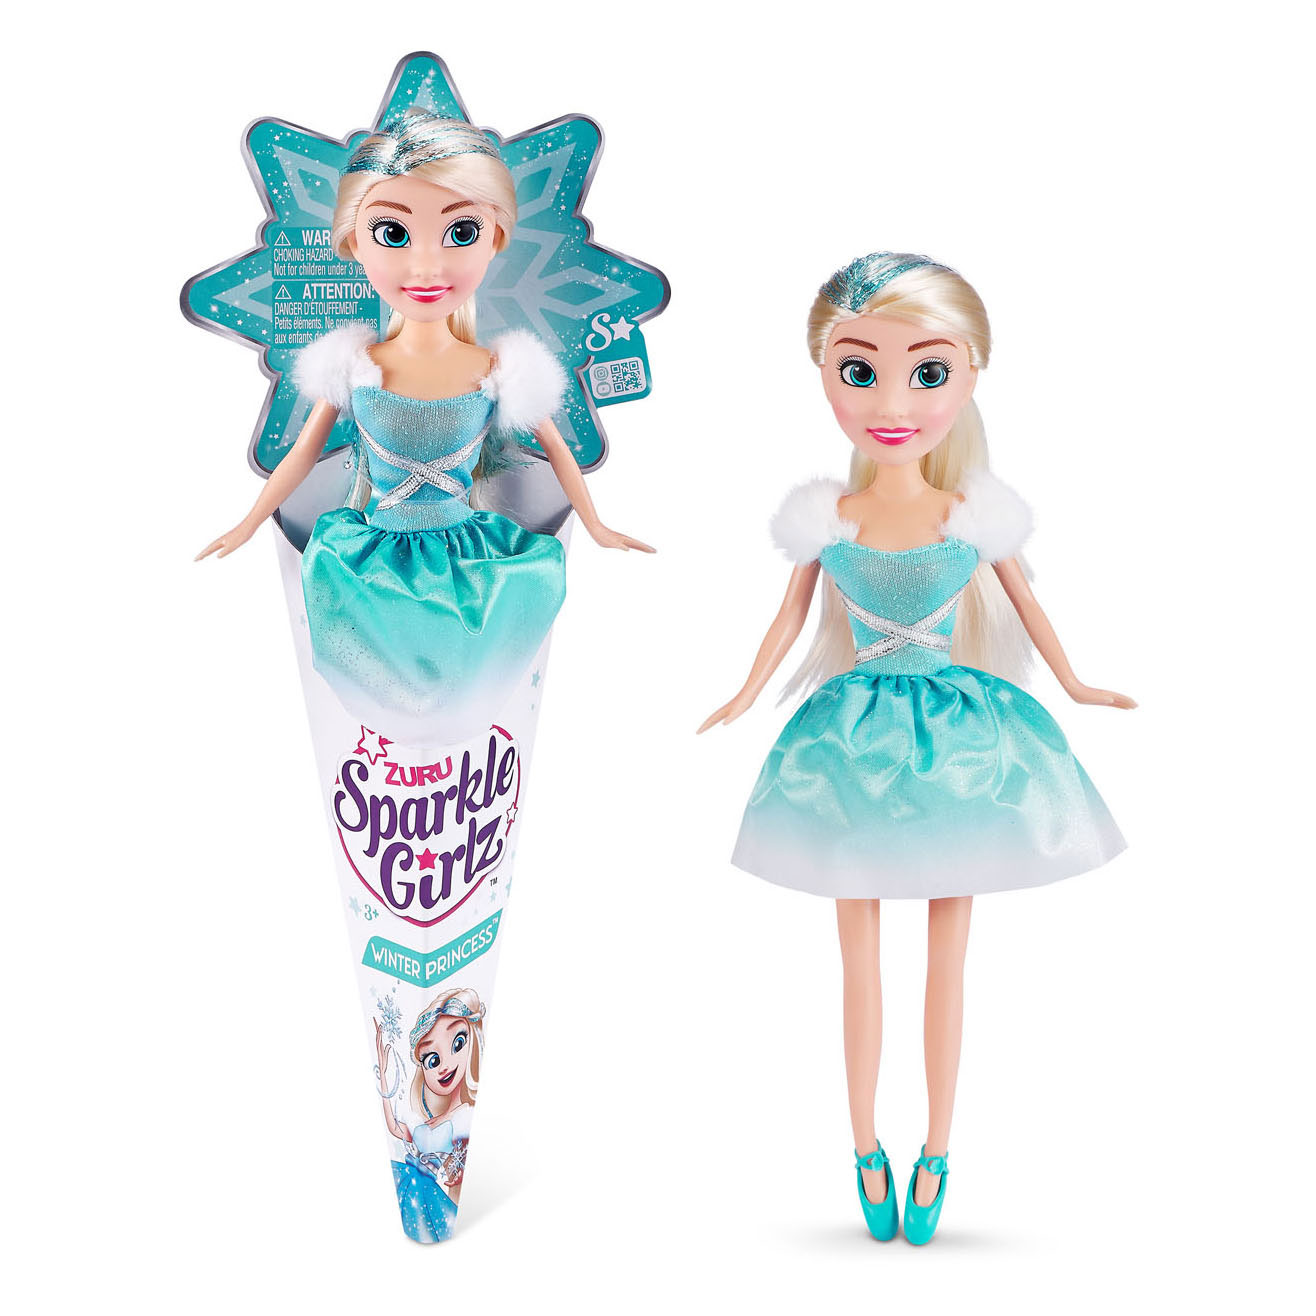 24 Wholesale Zuru Sparkle Girlz Doll (fairy) - at 